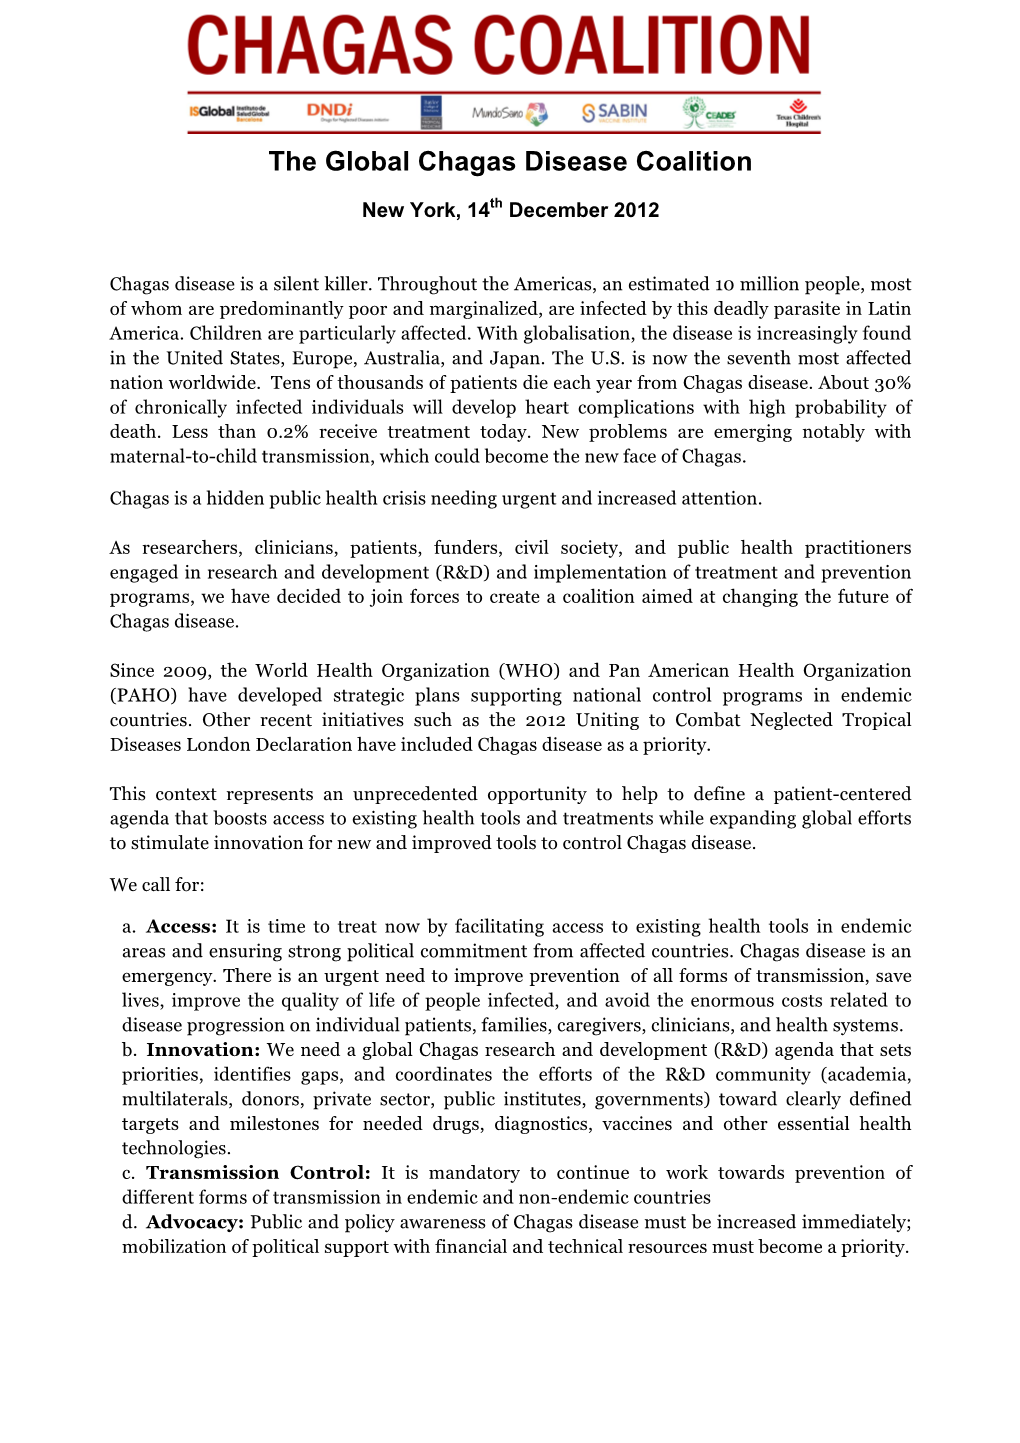 Global Chagas Coalition Declaration